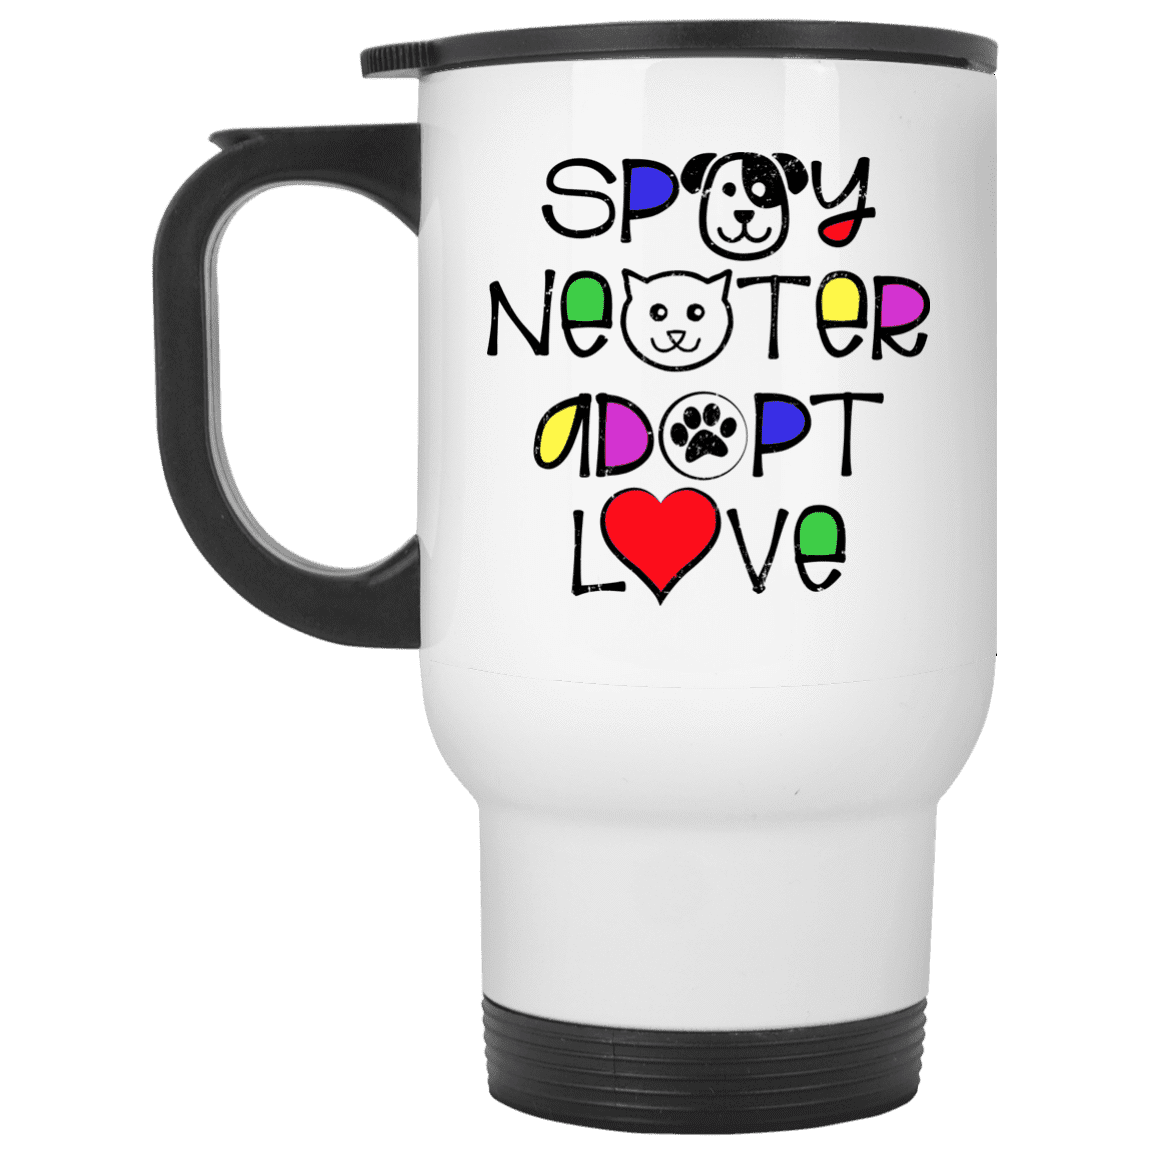 Spay Neuter Adopt Love - Mugs.